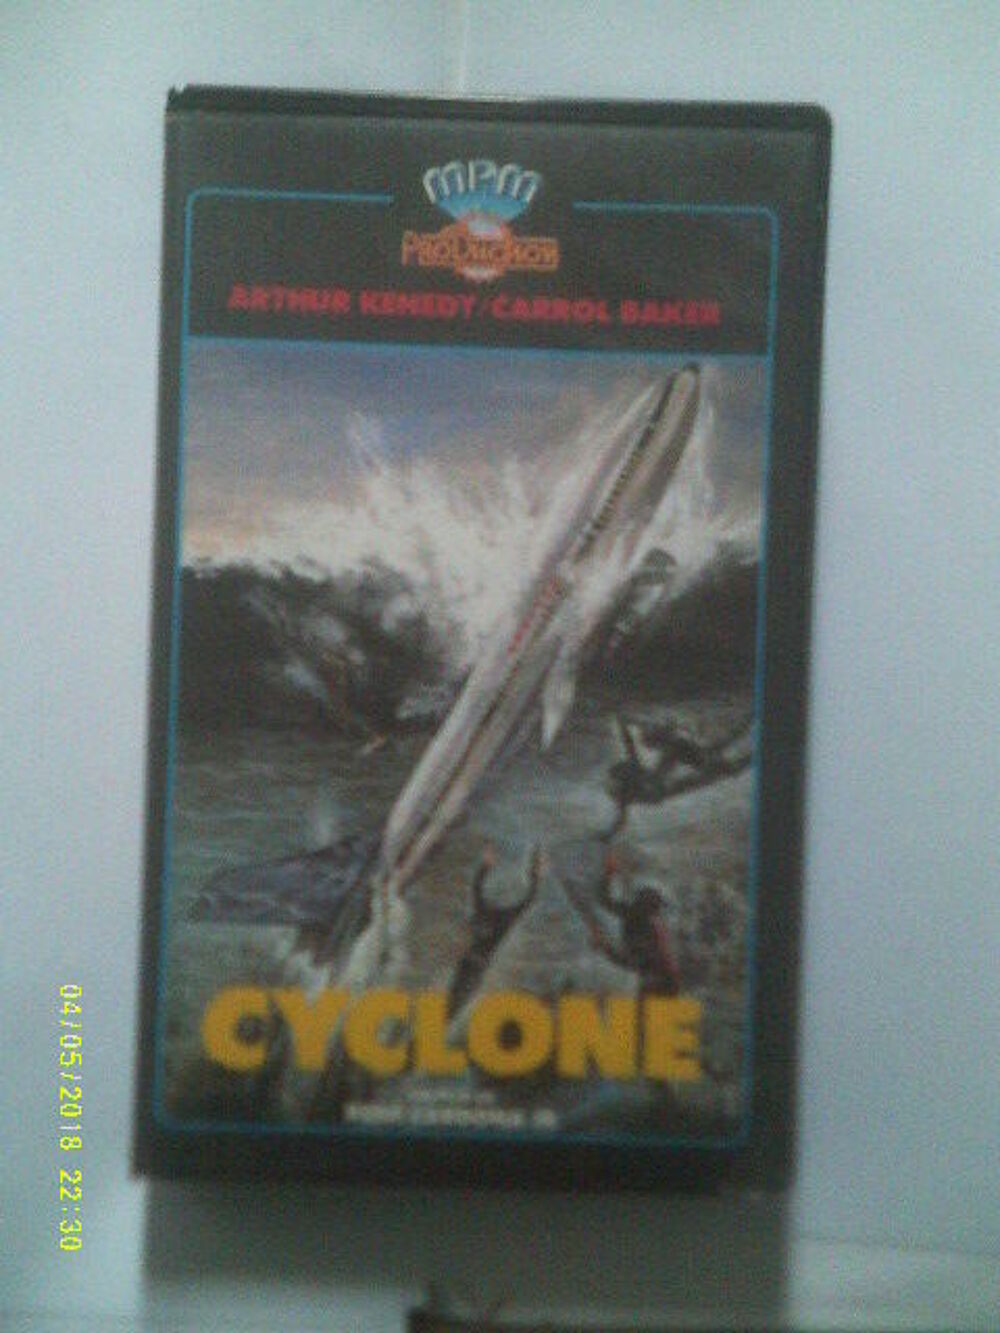 CYCLONE avec arthur Kennedy (paypal accepte) DVD et blu-ray